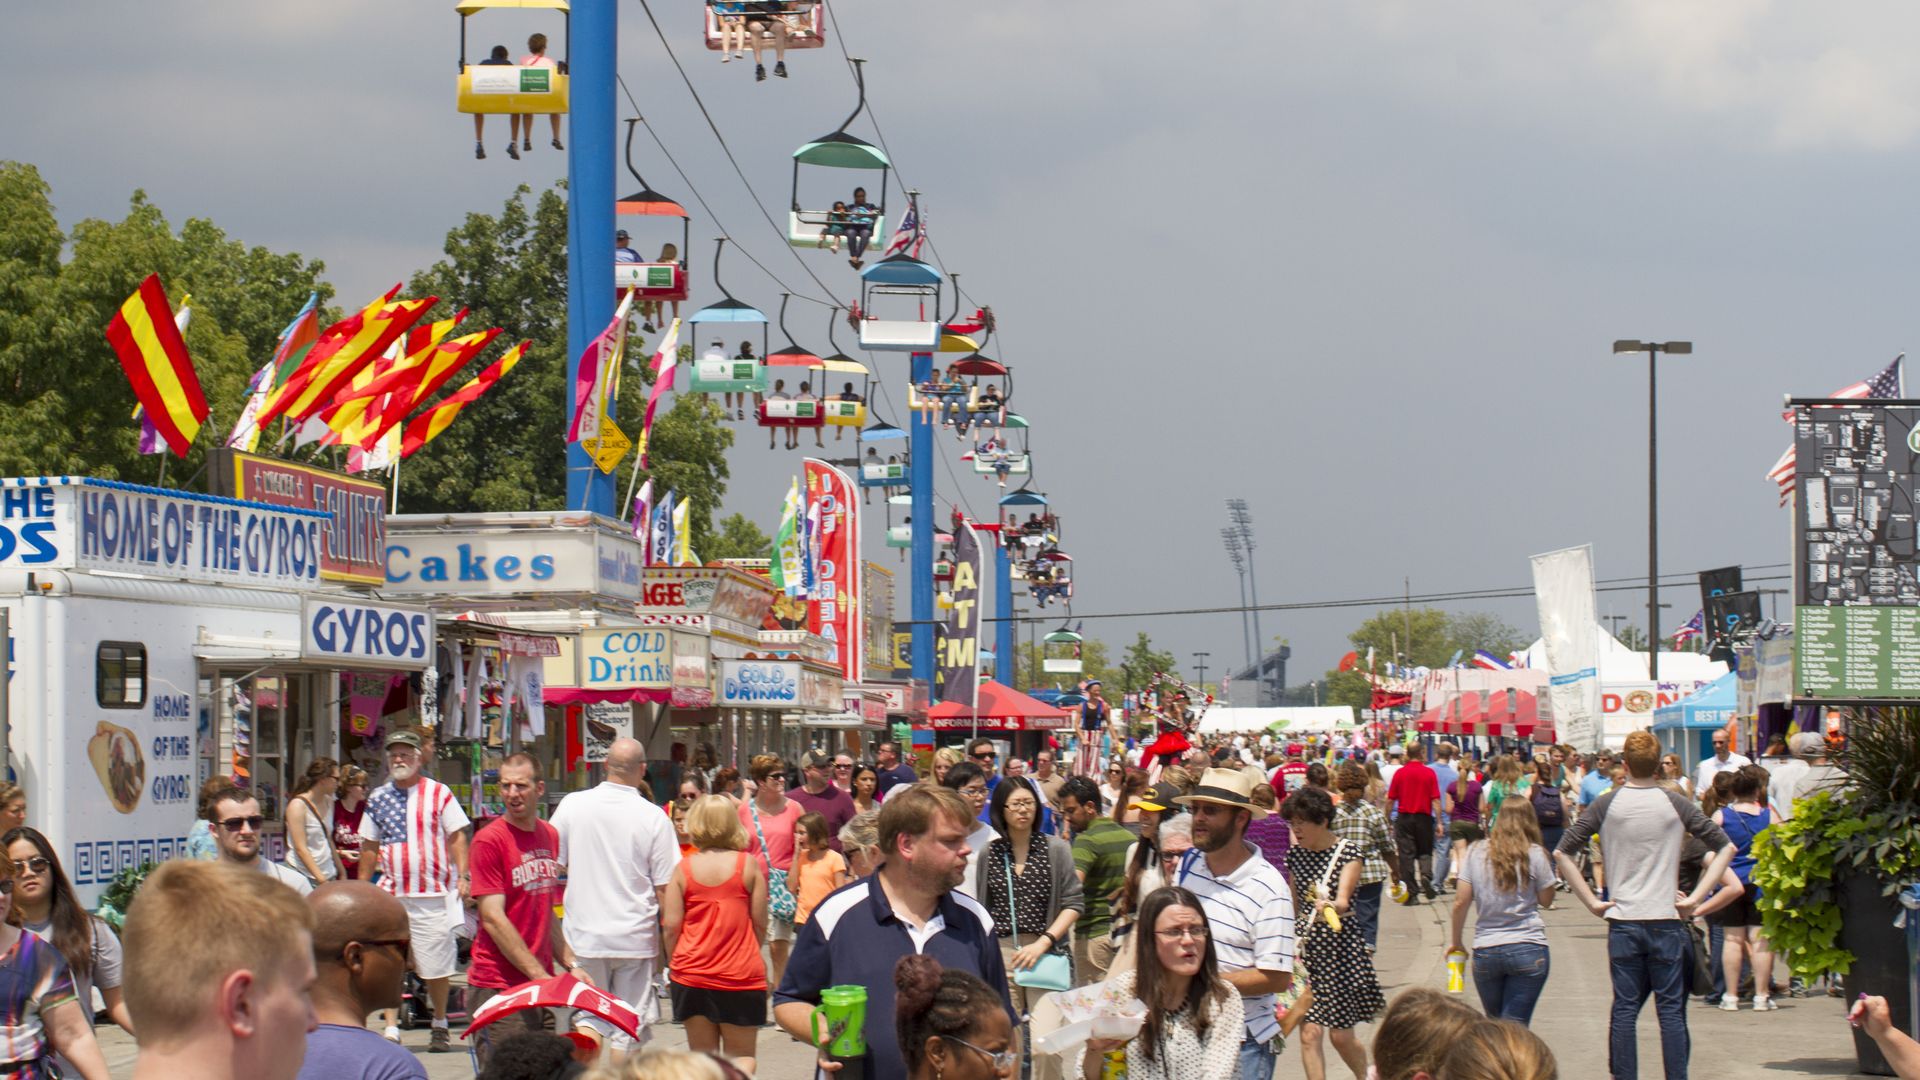 A crowd enjoys the Ohio State Fair.